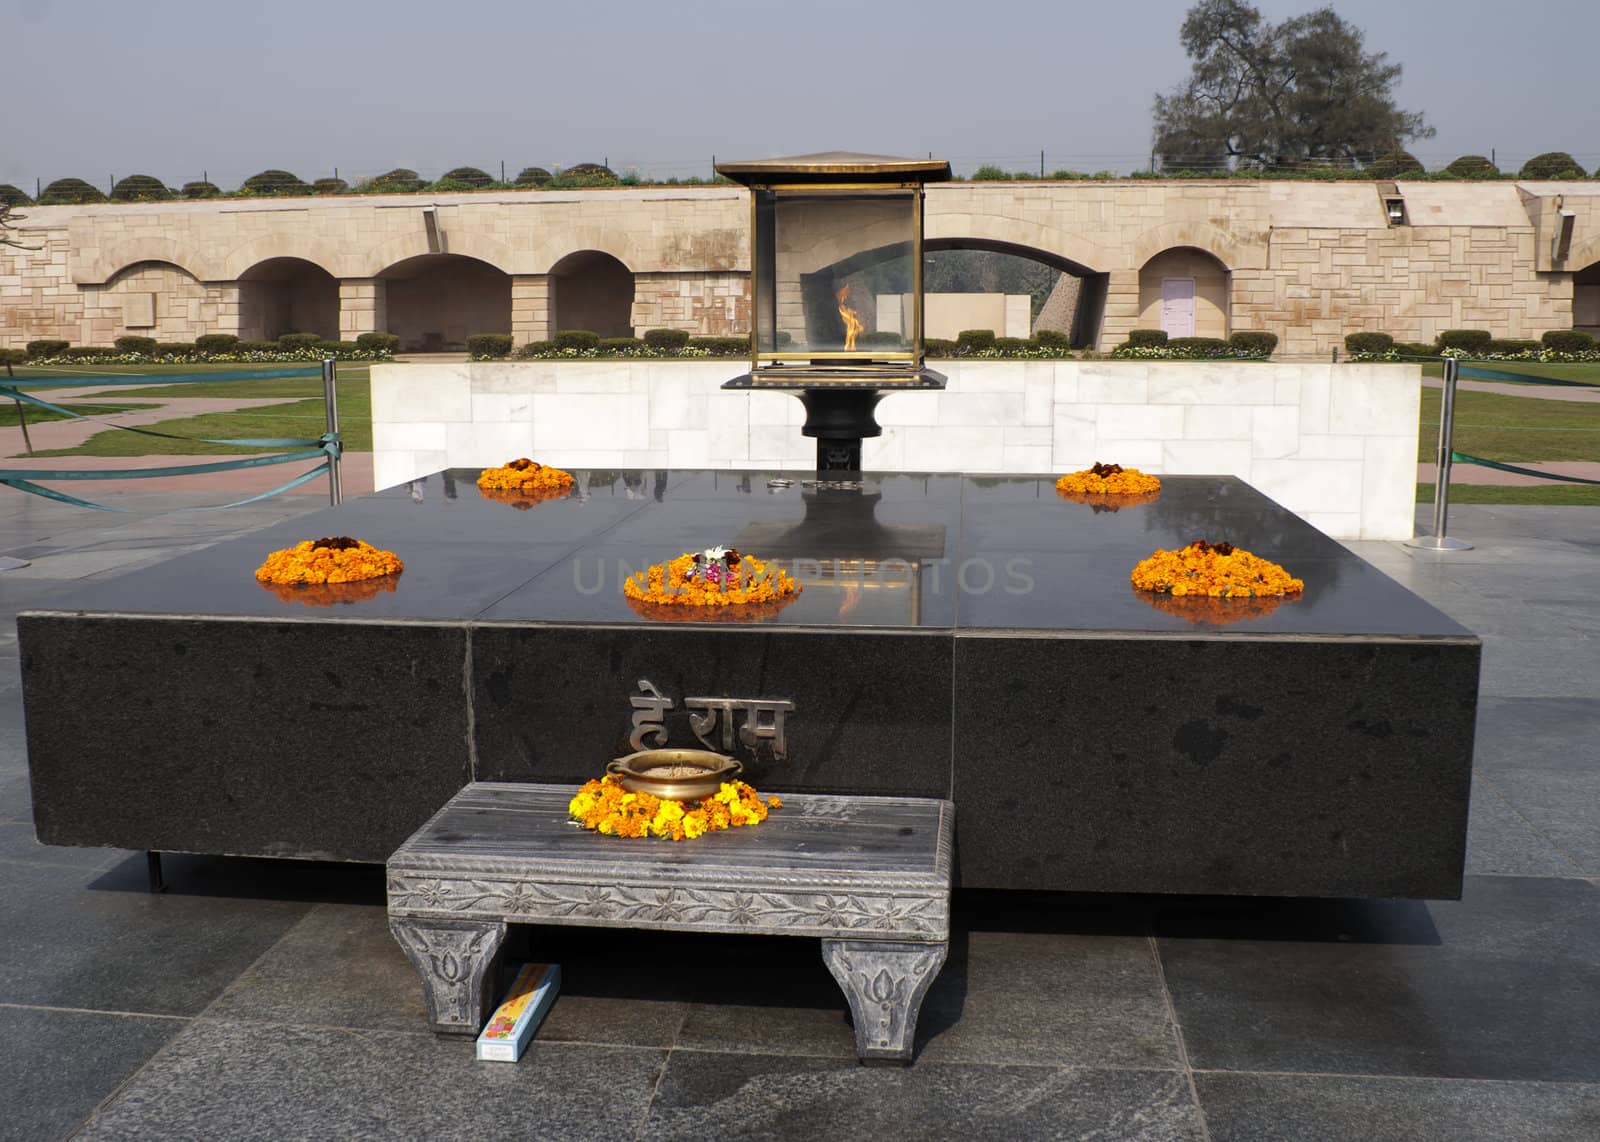 Park dedicated to rememberance of Ghandi.